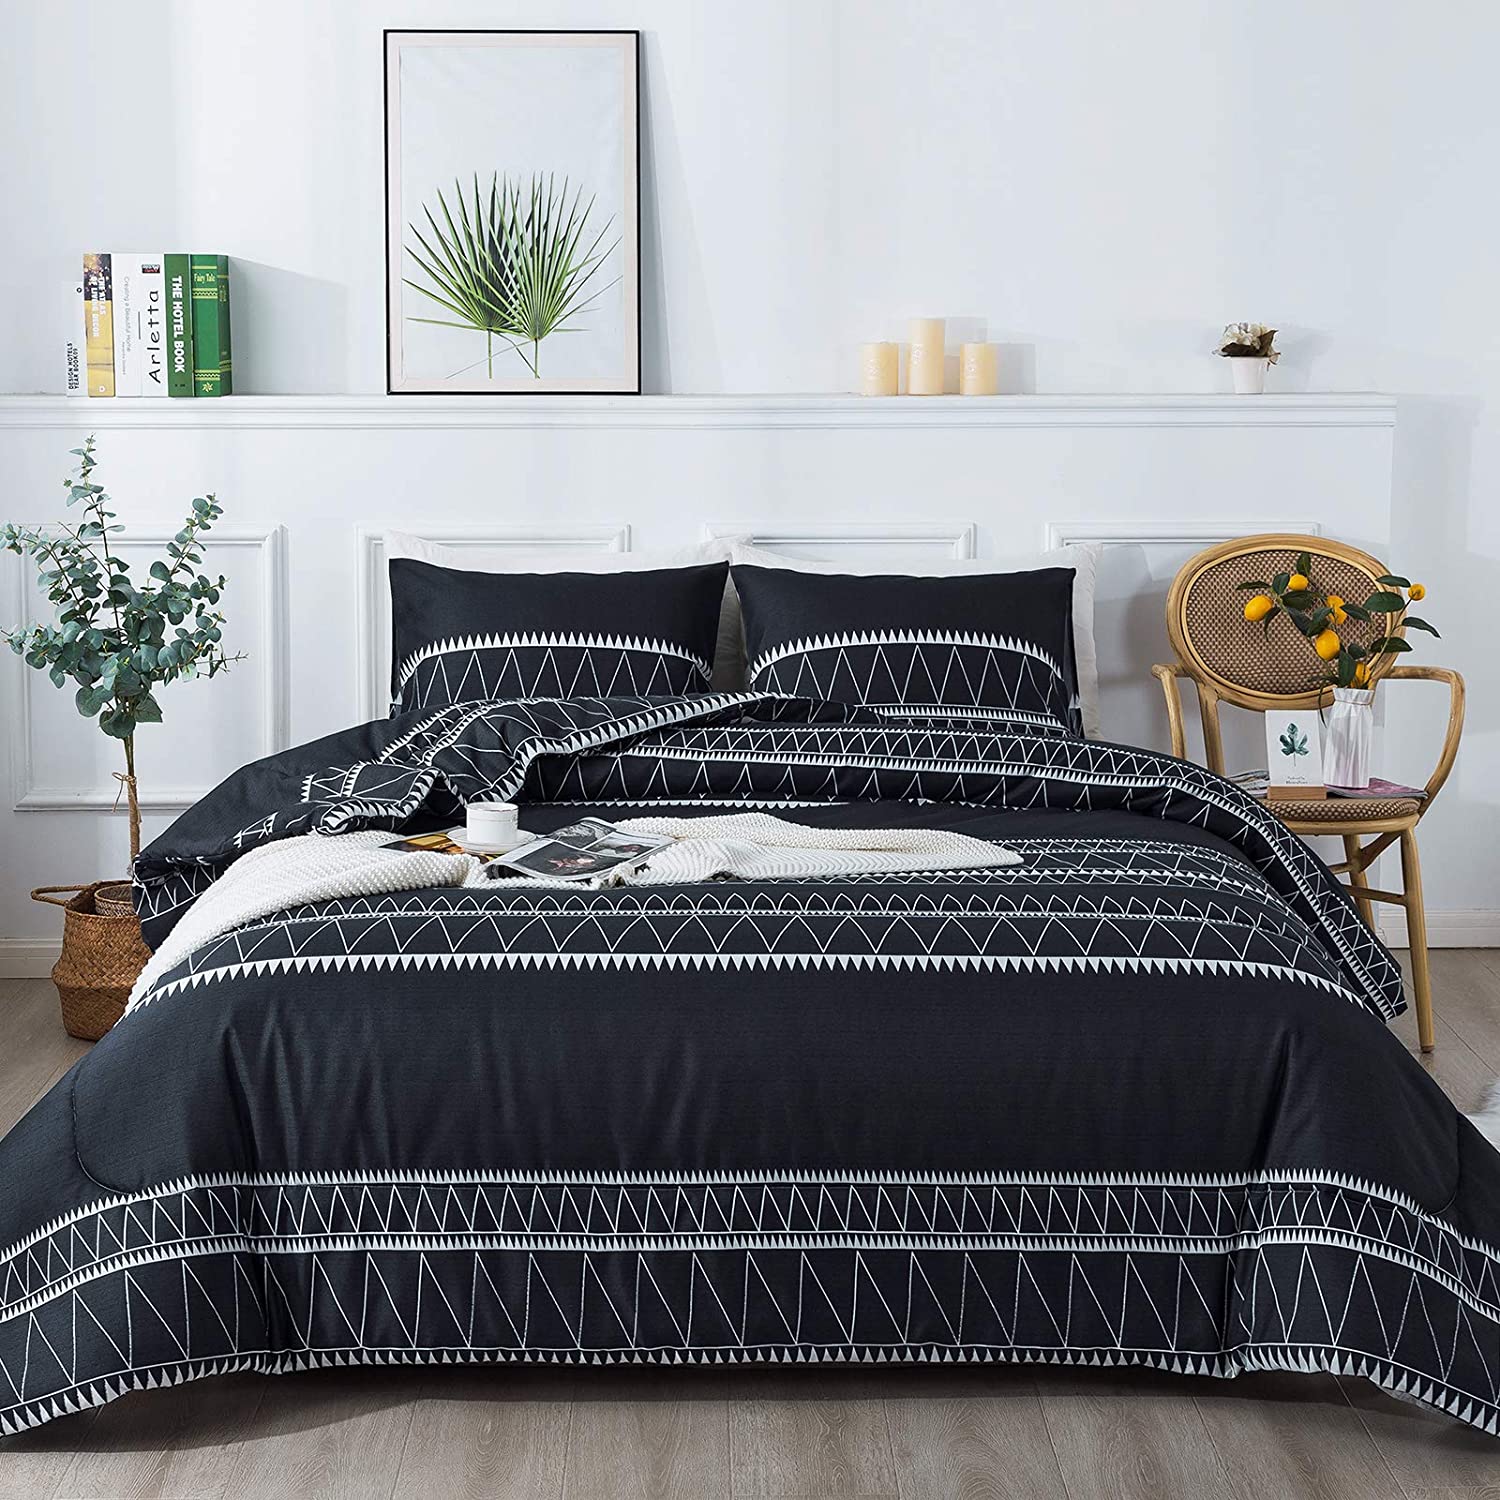 Black Boho Comforter, 3 Pieces (1 Triangle Geometric Striped Comforter+2 Pillowcases), Soft Microfiber Grey Bohemian Down Alternative Comforter Set Duvet Insert